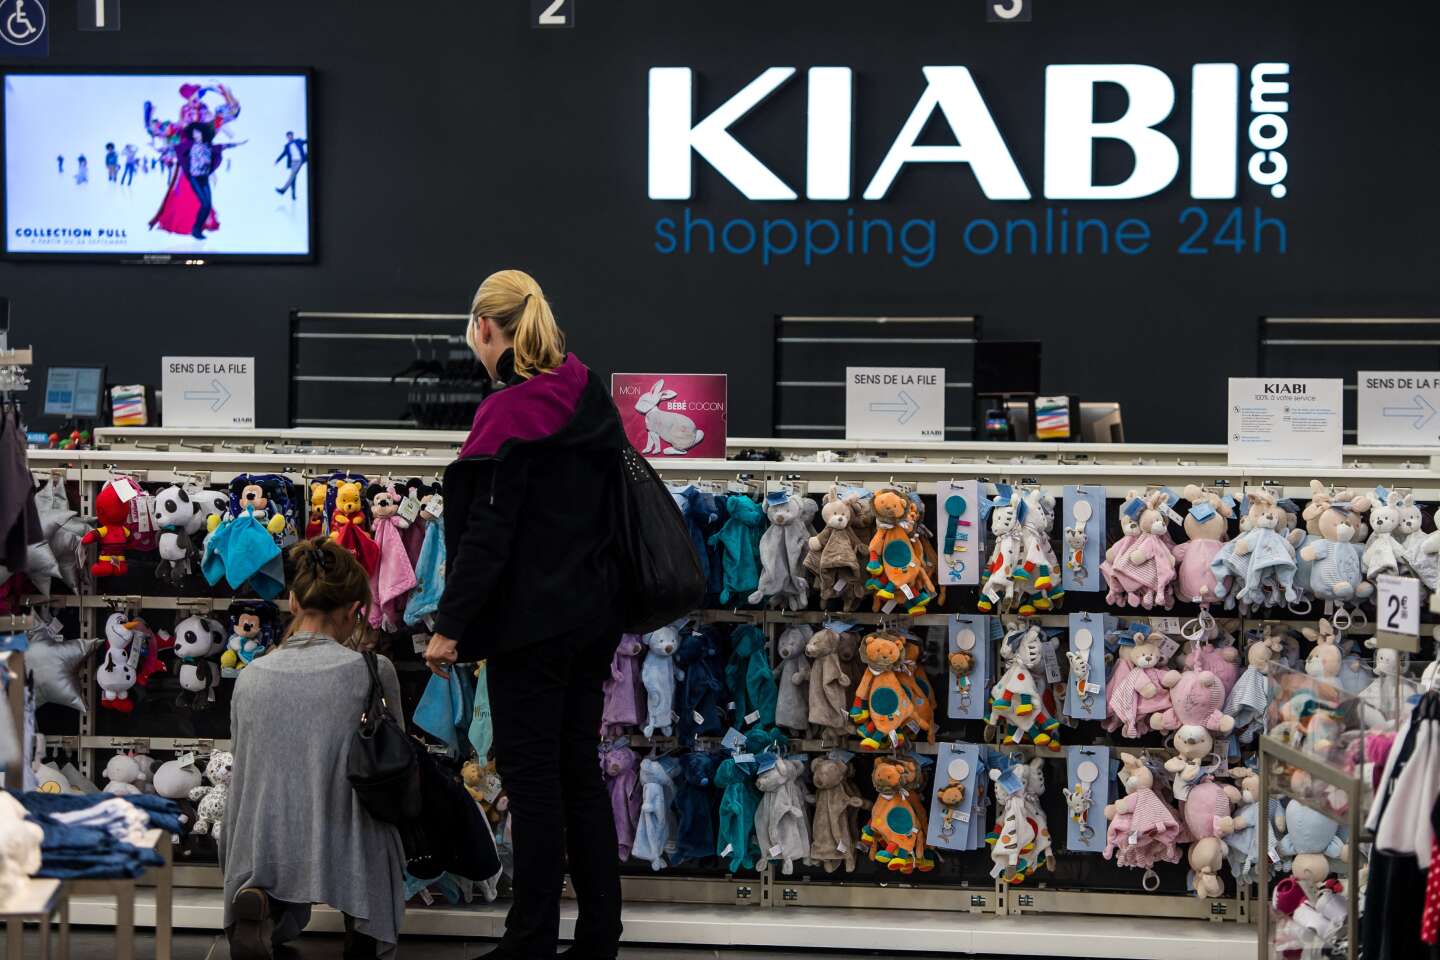 Kiabi resists the clothing crisis